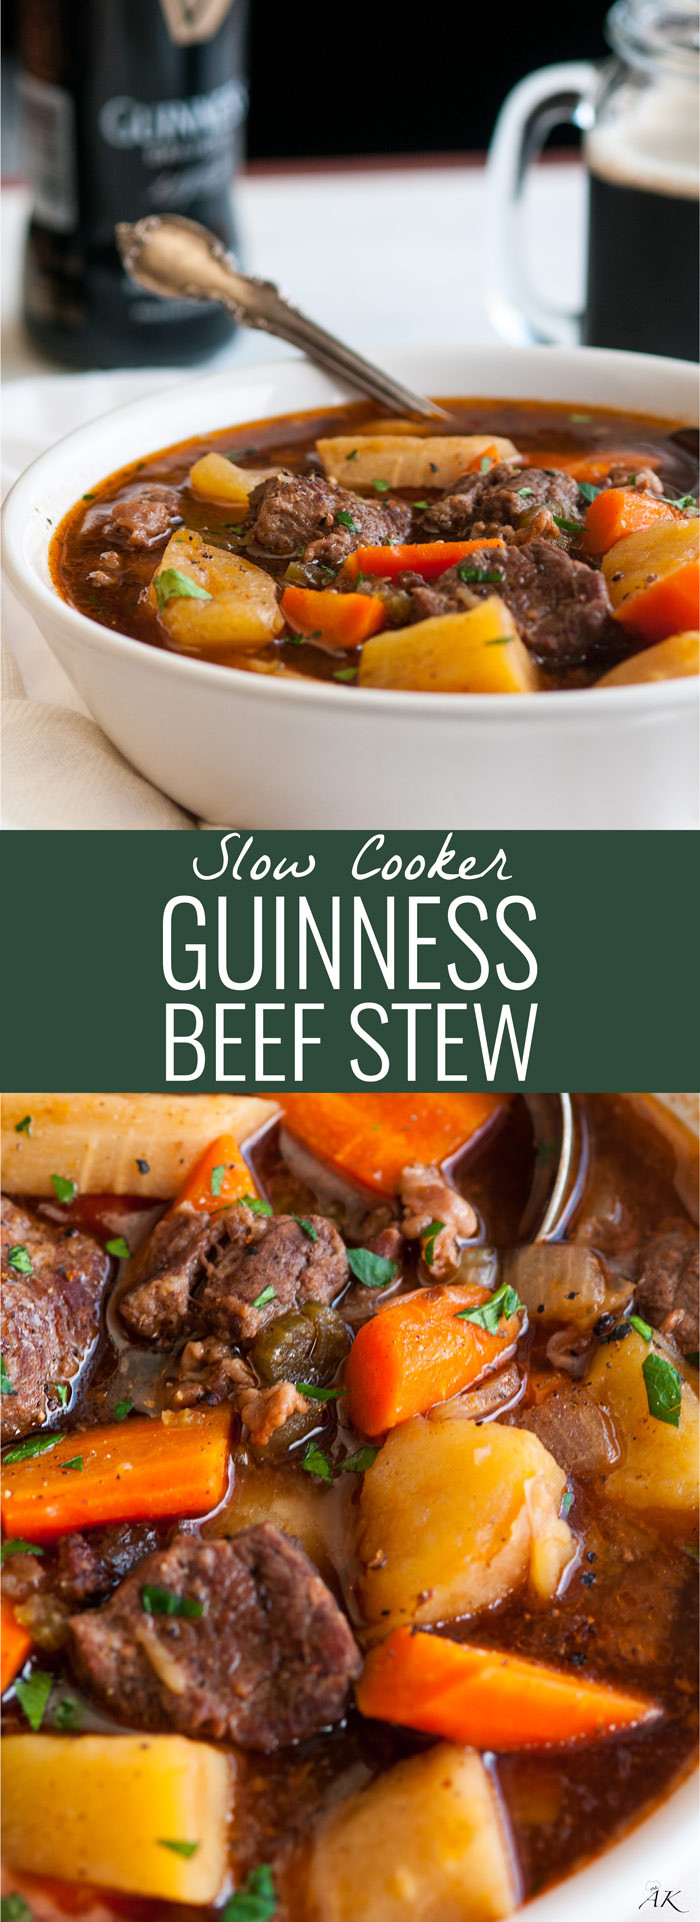 Venison Stew Slow Cooker
 Slow Cooker Guinness Beef Stew Aberdeen s Kitchen